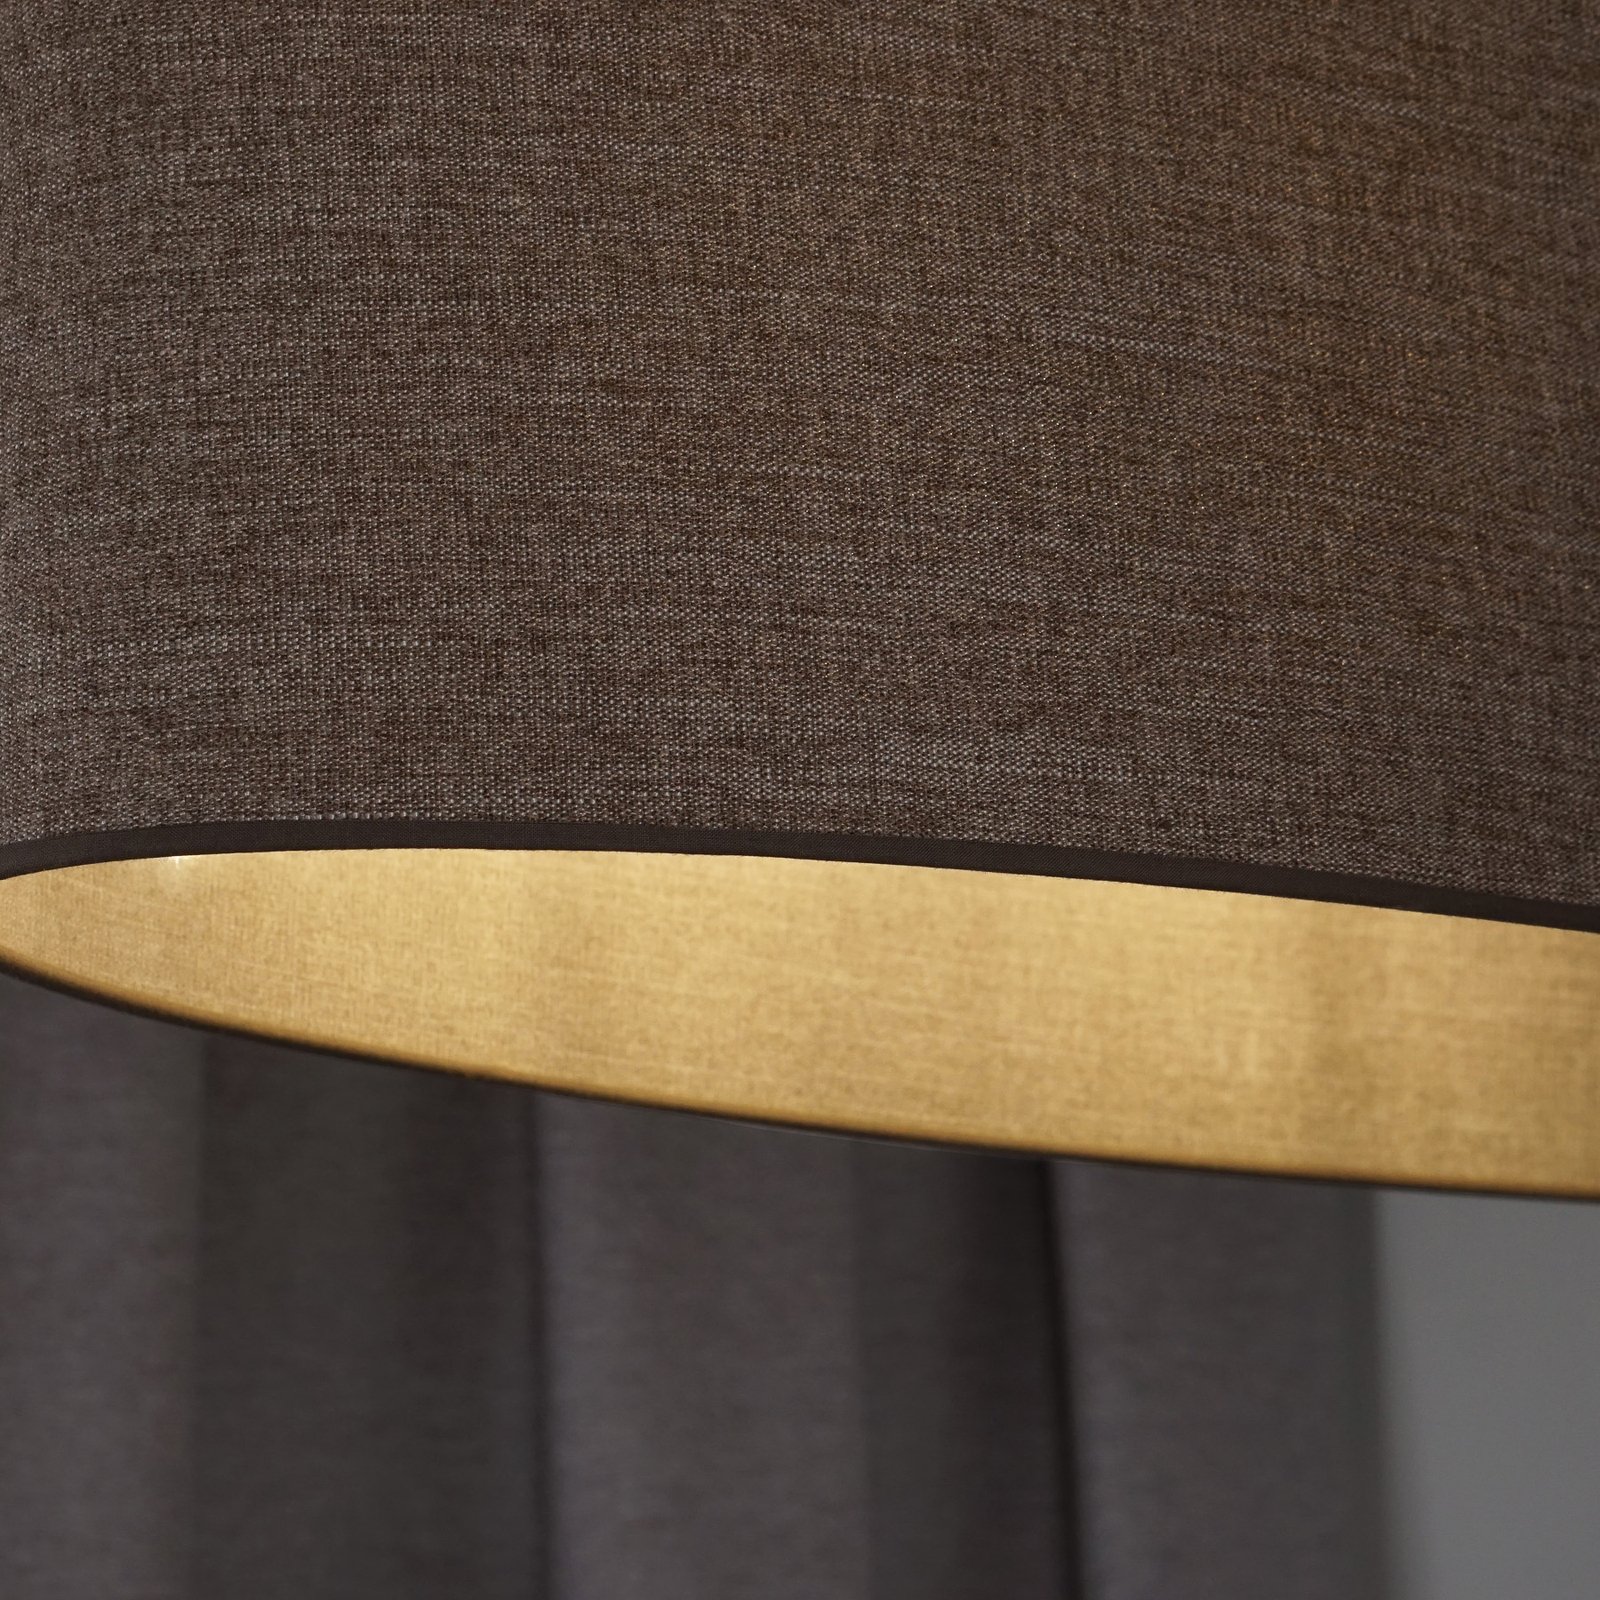 Euluna ceiling lamp Celine, cappuccino, chenille fabric, 80 cm